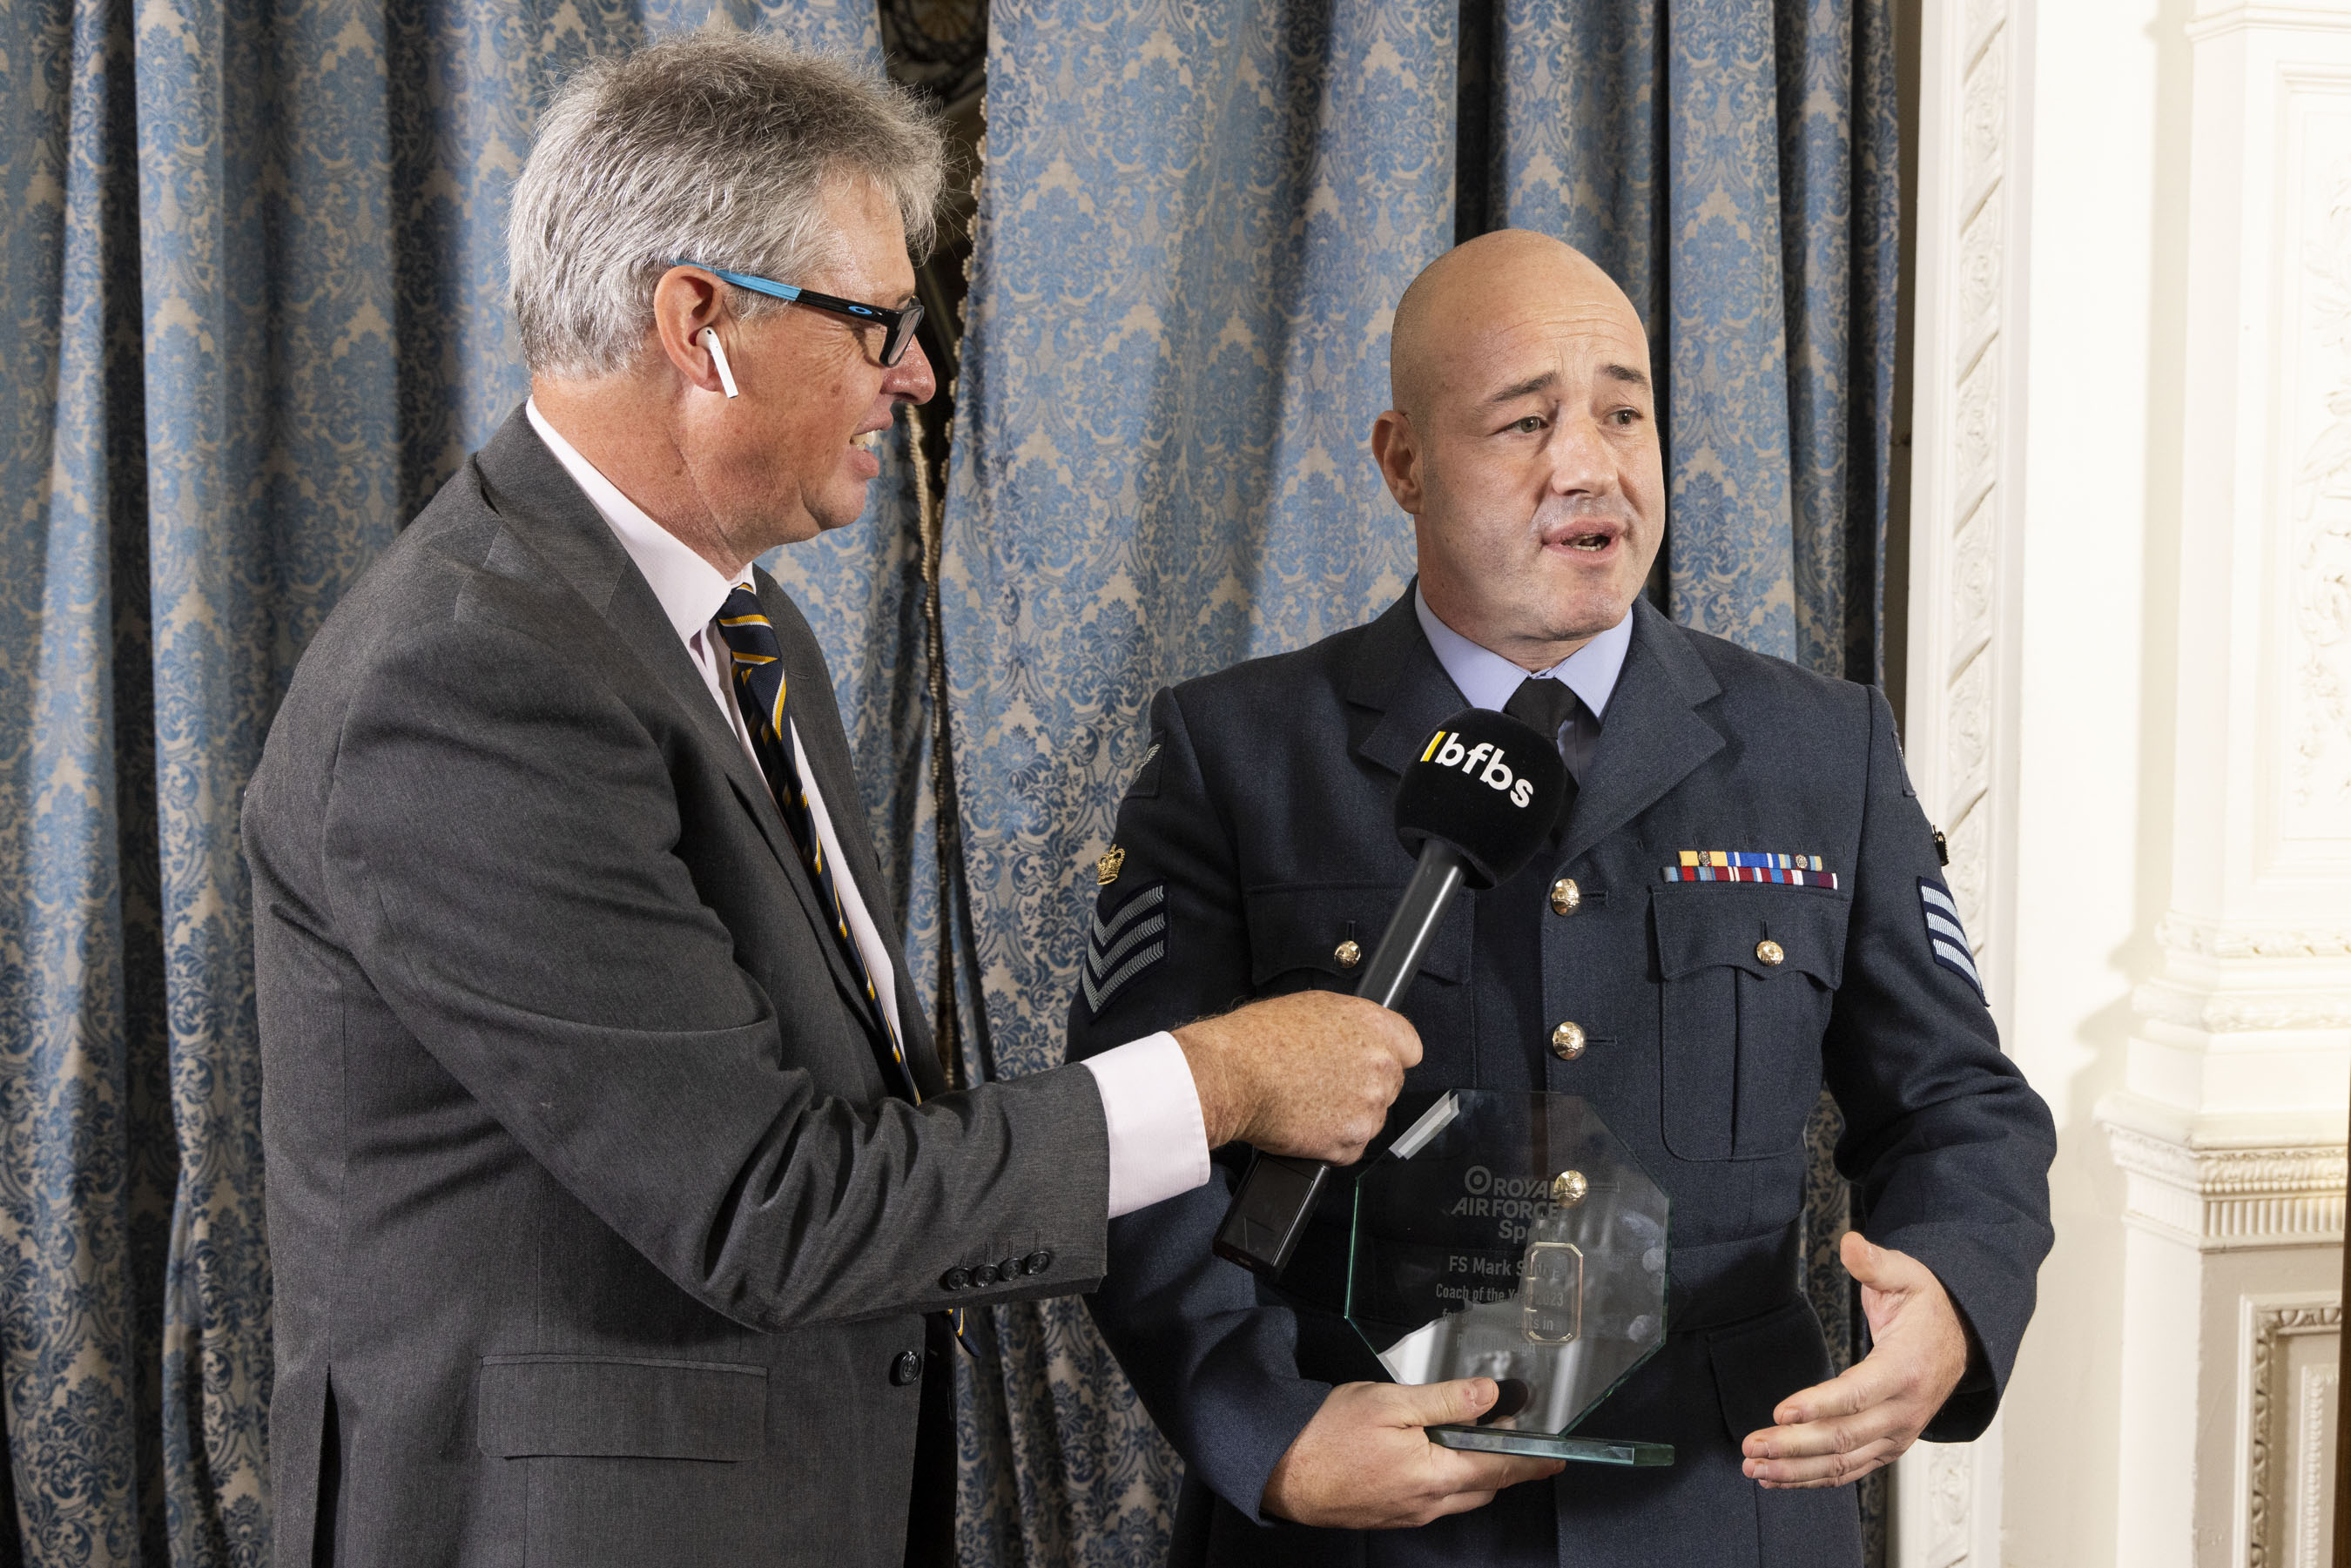 Coach of the Year Award Recipient Flight Sergeant Silva